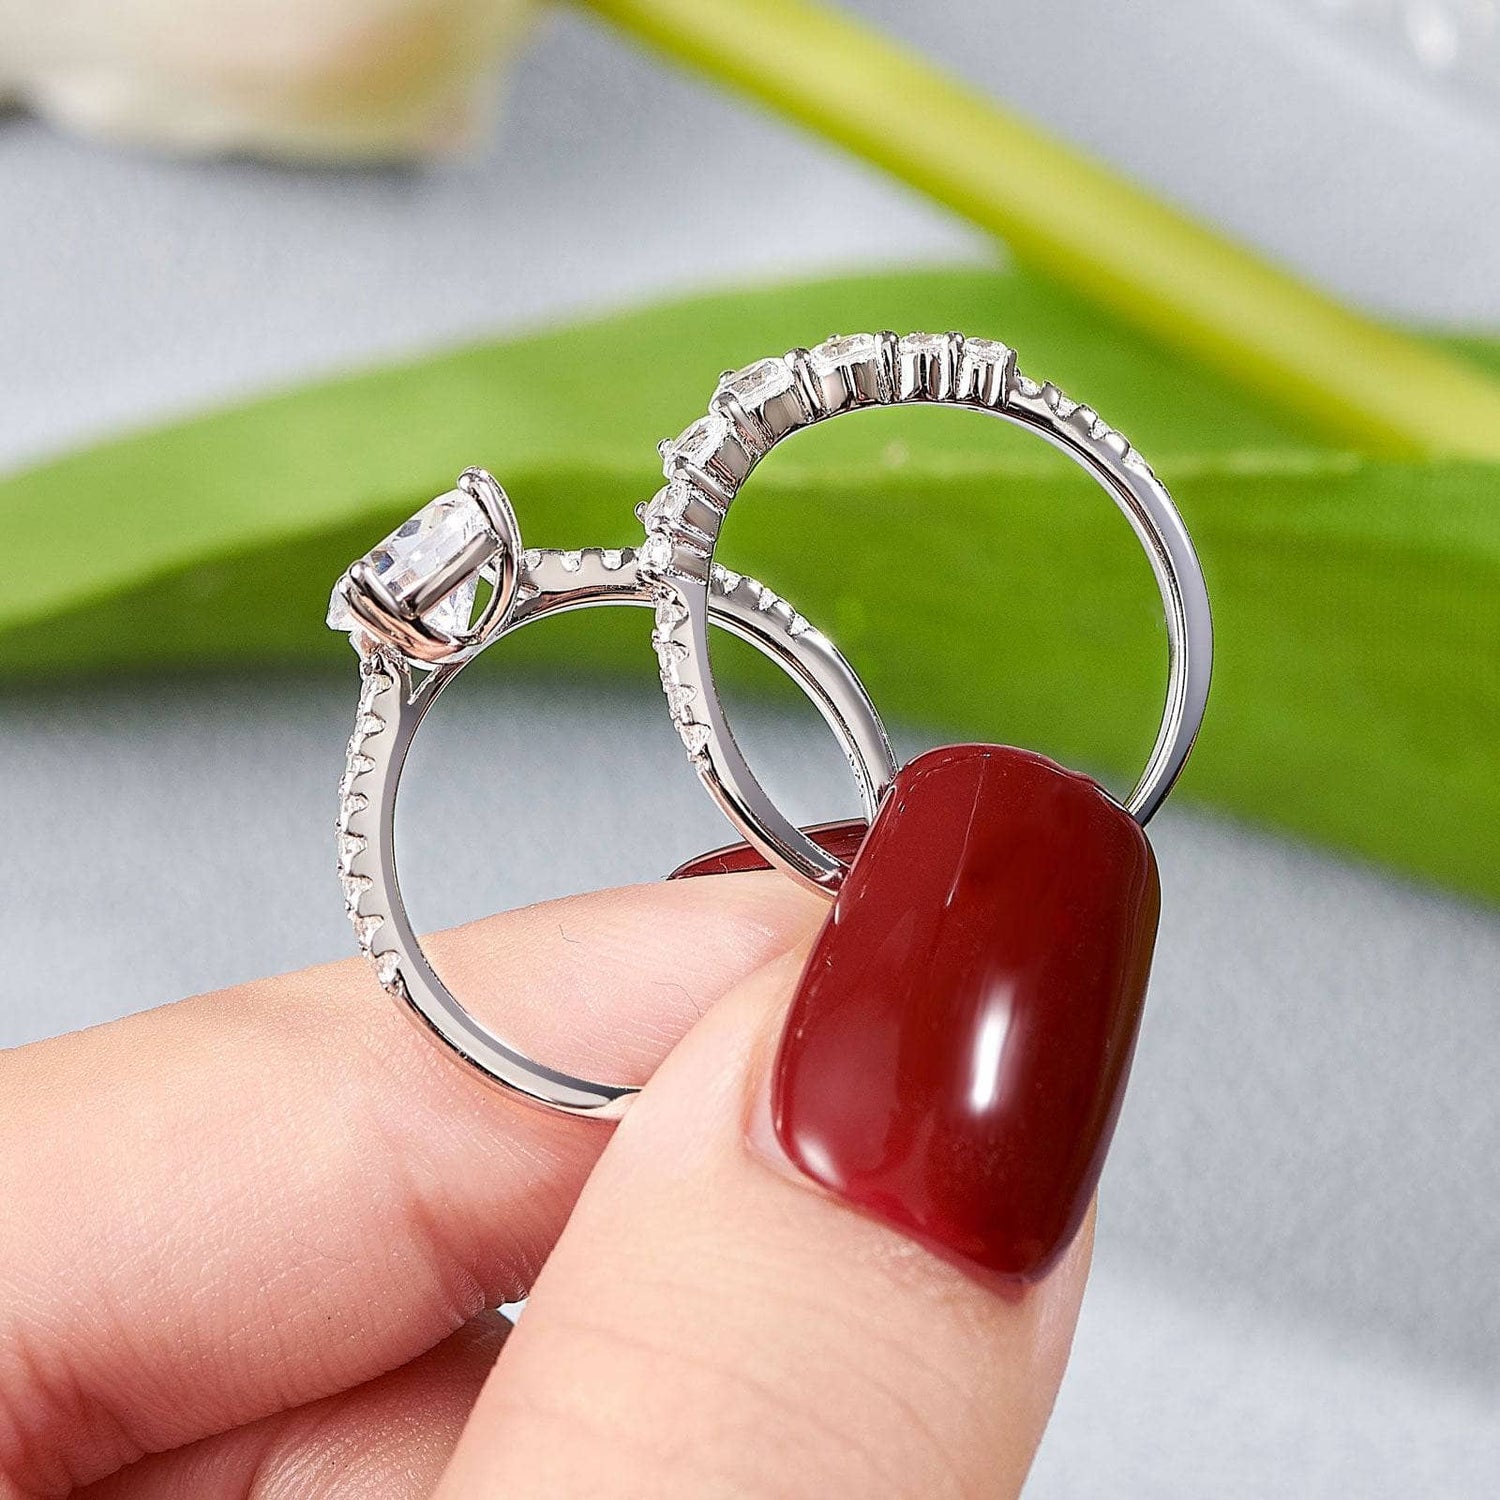 7*11mm Pear Cut Created Diamond Engagement Ring Set-Black Diamonds New York